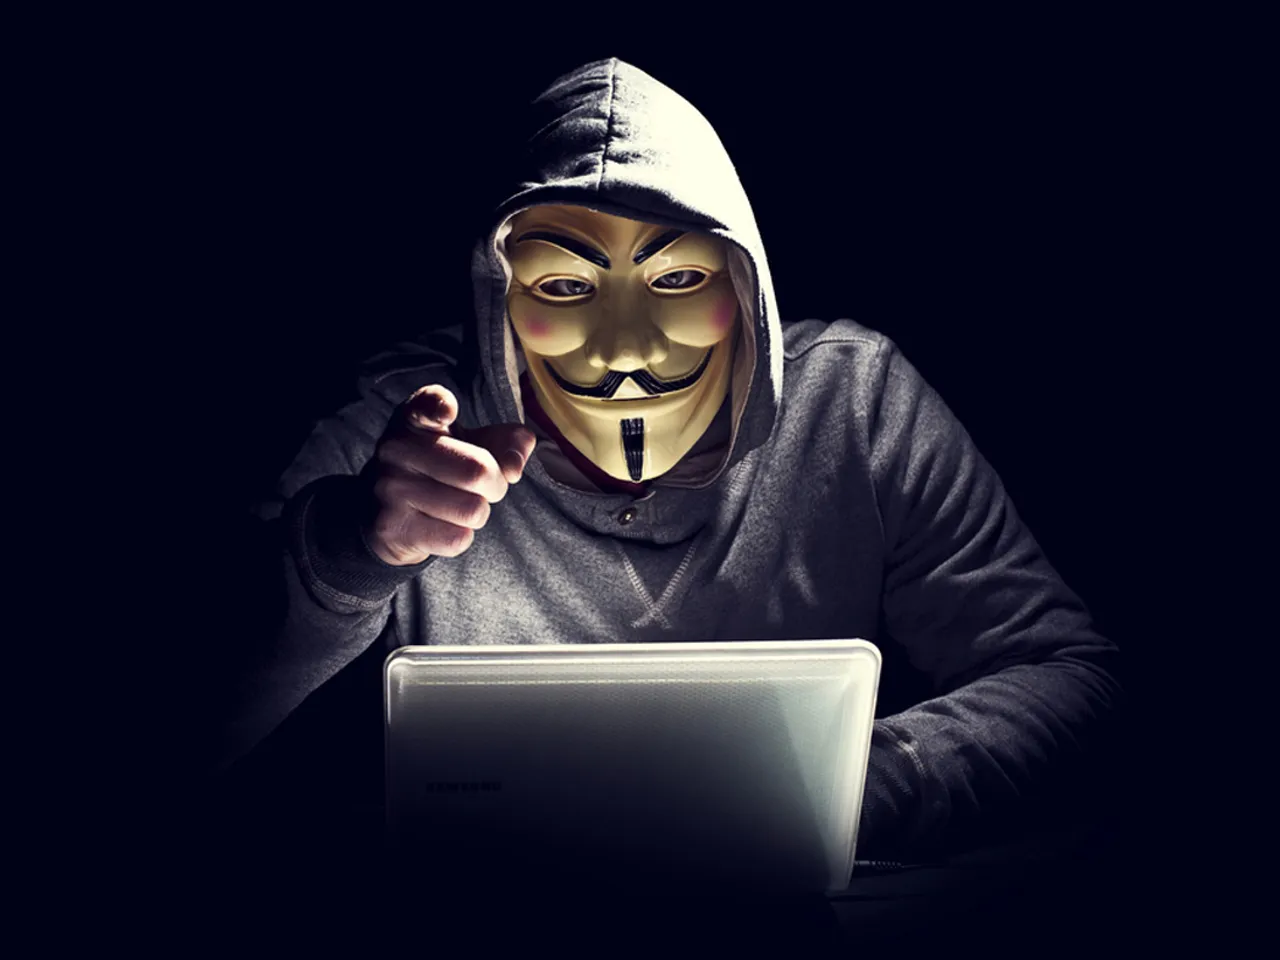 Anonymous takes over KITKAT's #mybreak